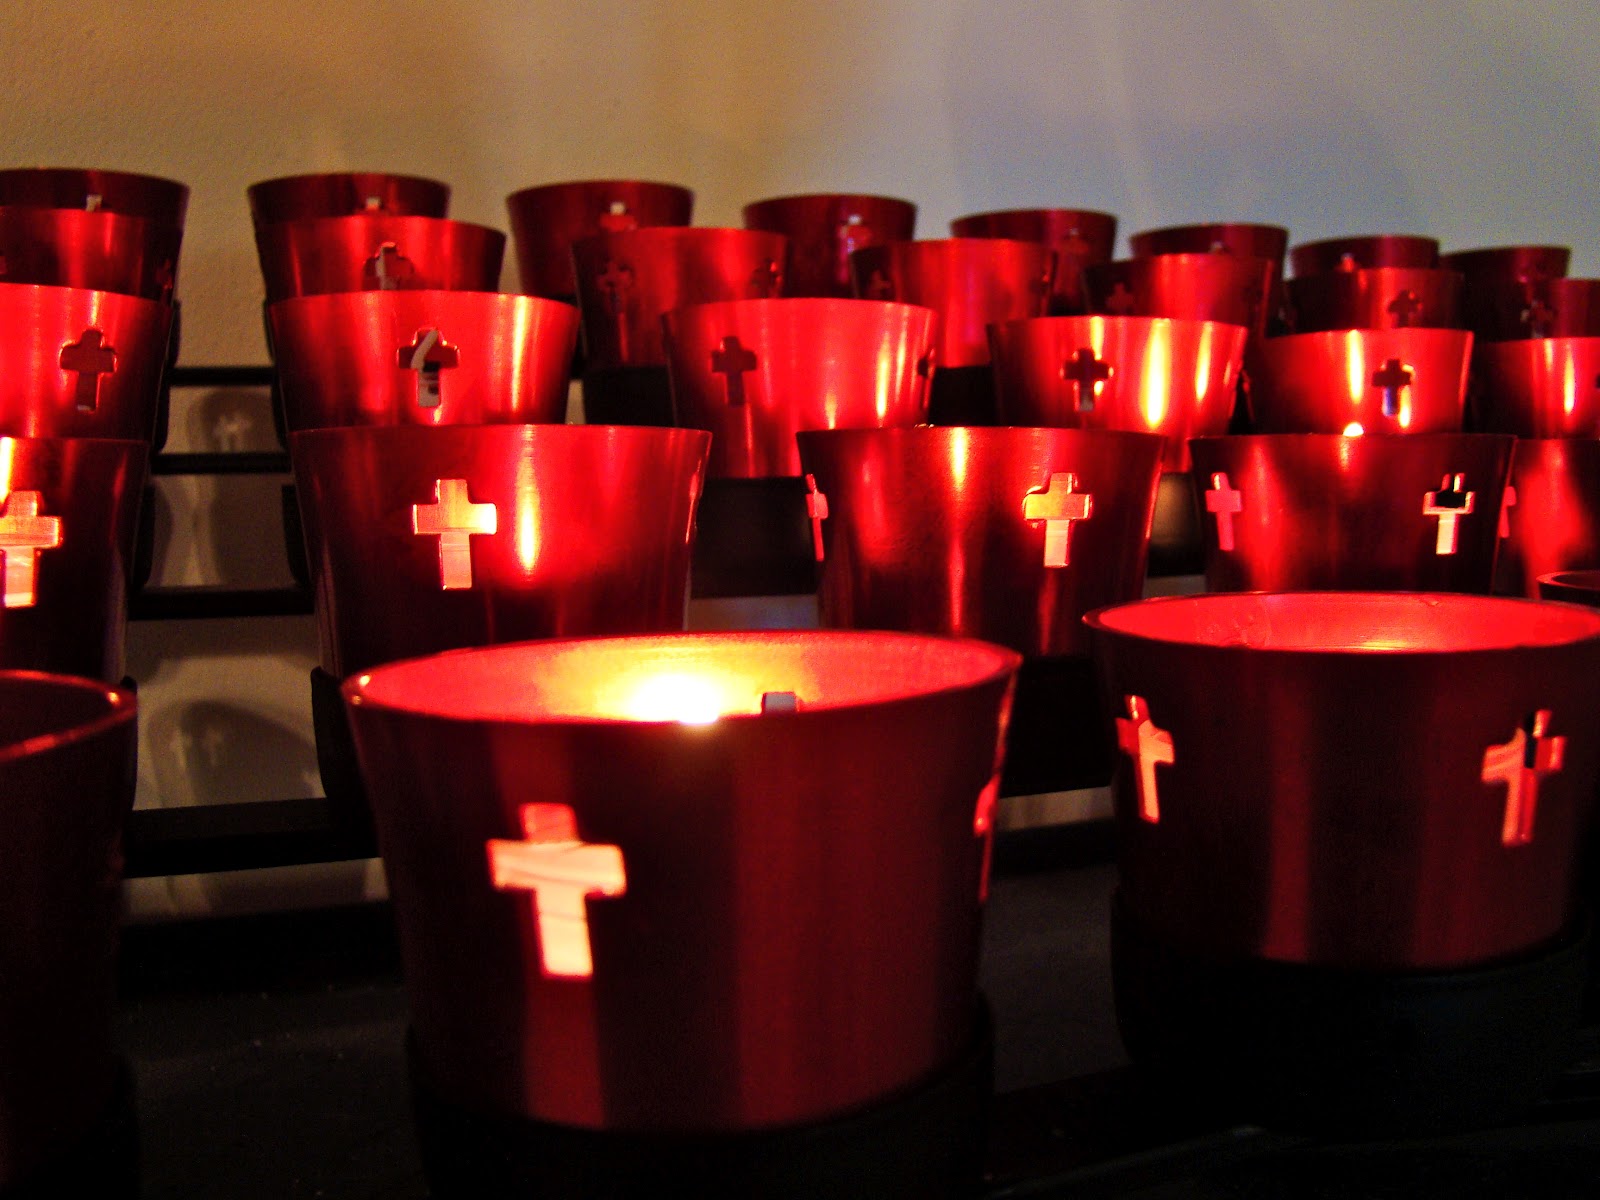 Why do Catholics Light Votive Candles? - Saint Patrick Catholic Church